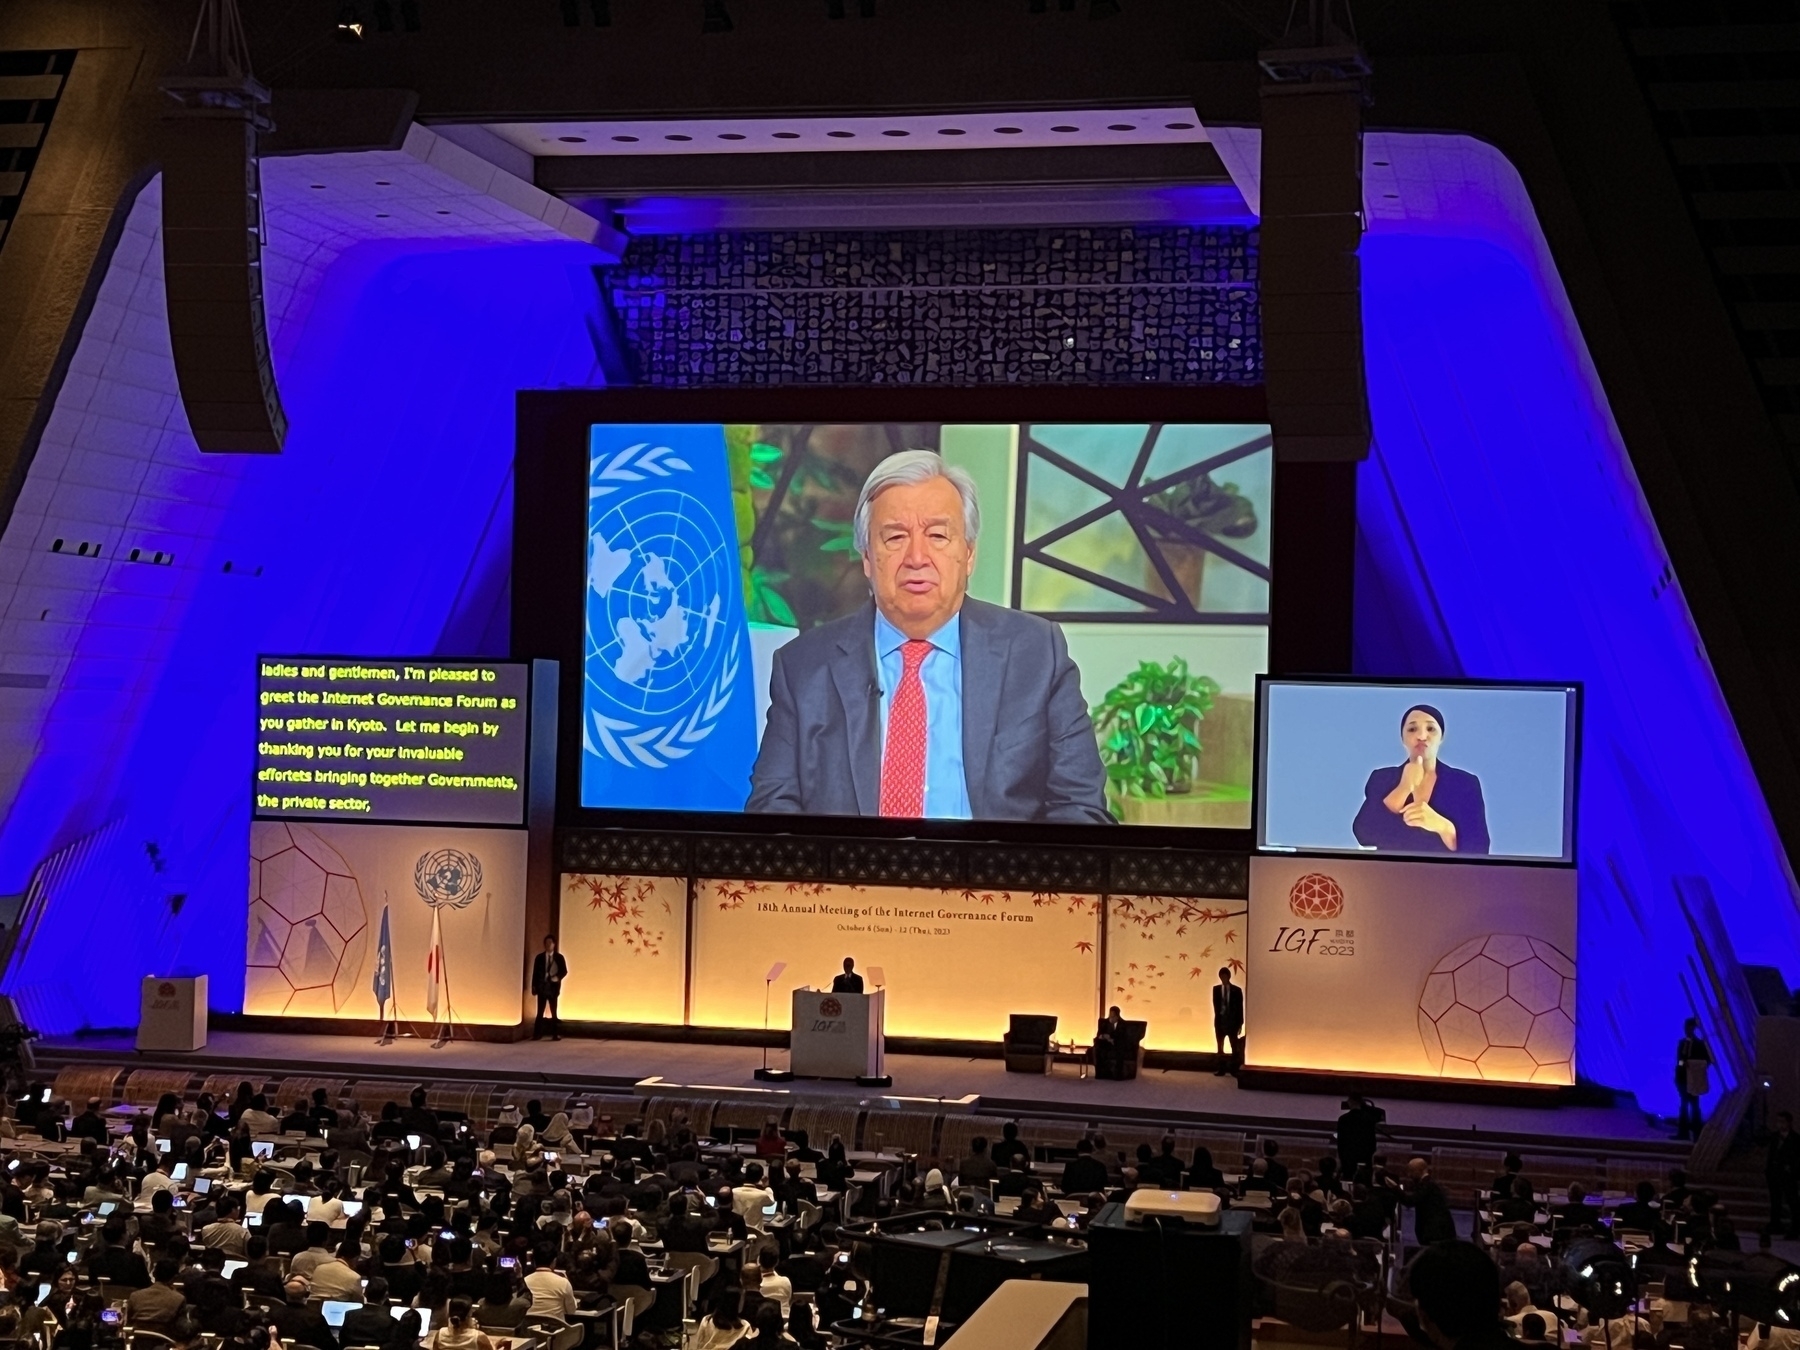 UN Secretary General Antonio Guterres delivers a speech from a large screen